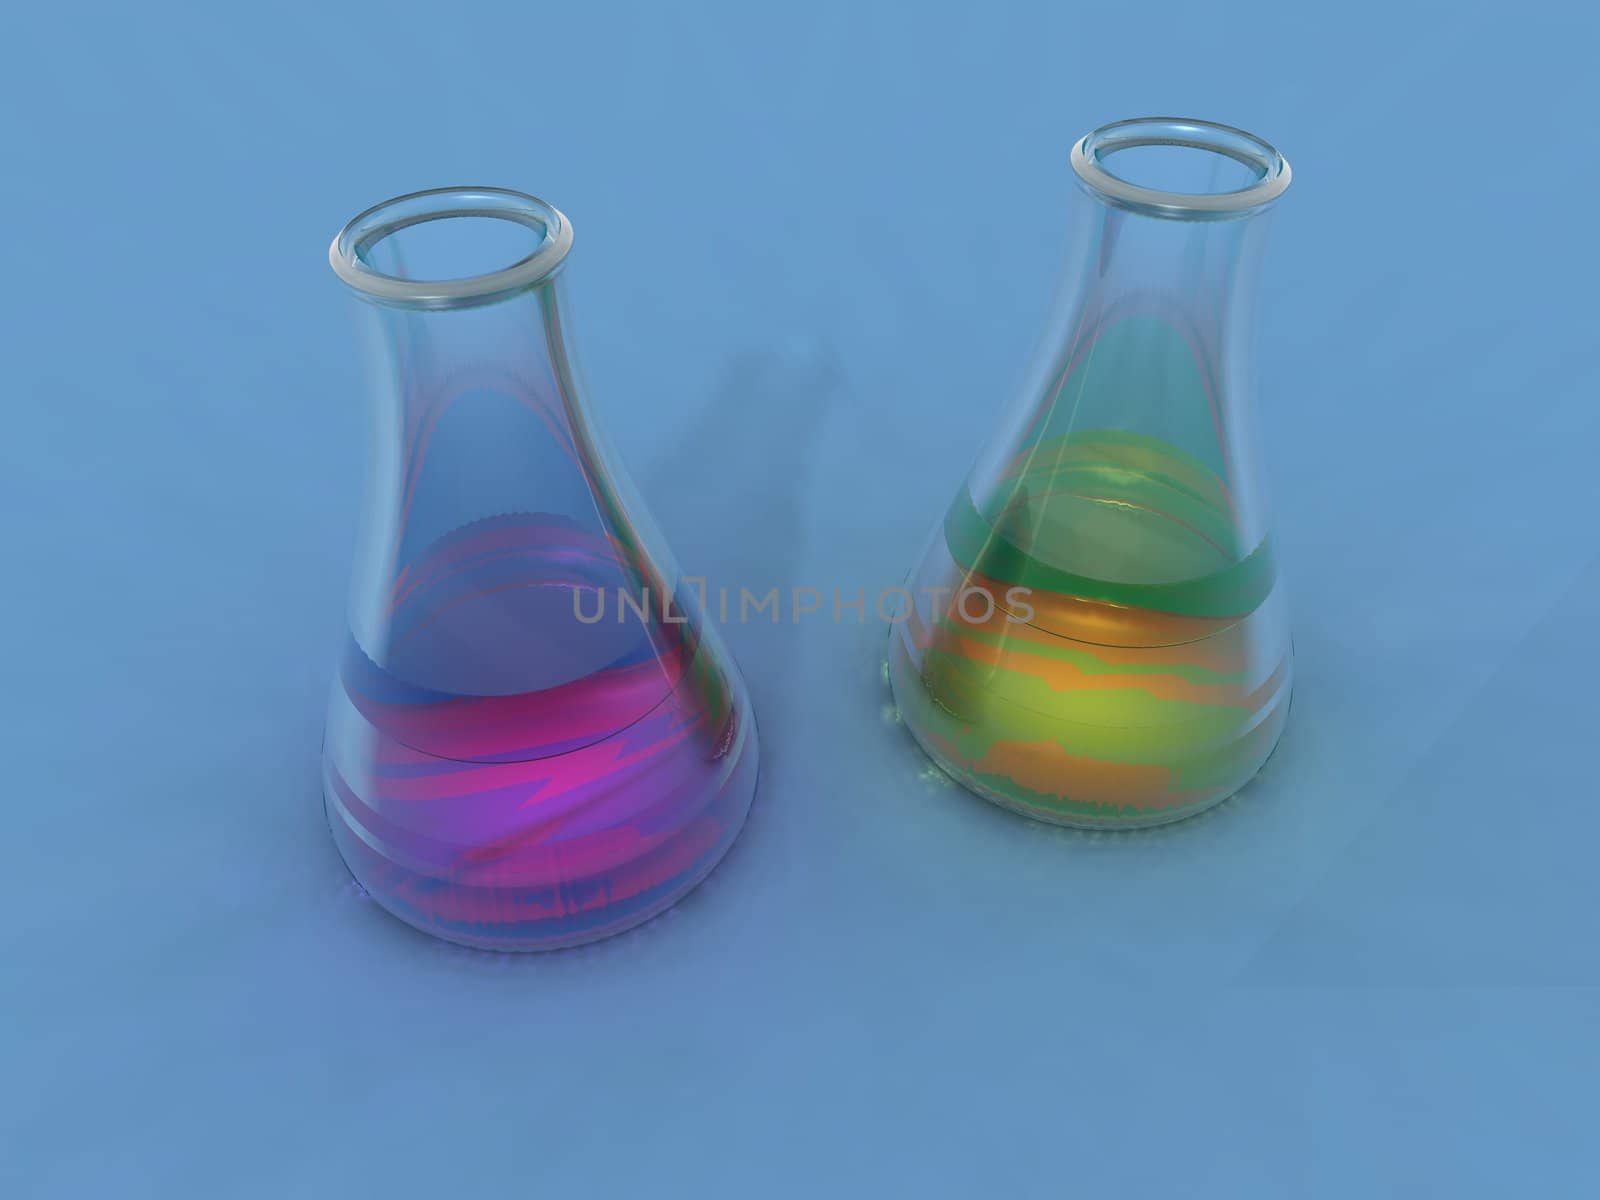 a 3d render of a chemistry flasks